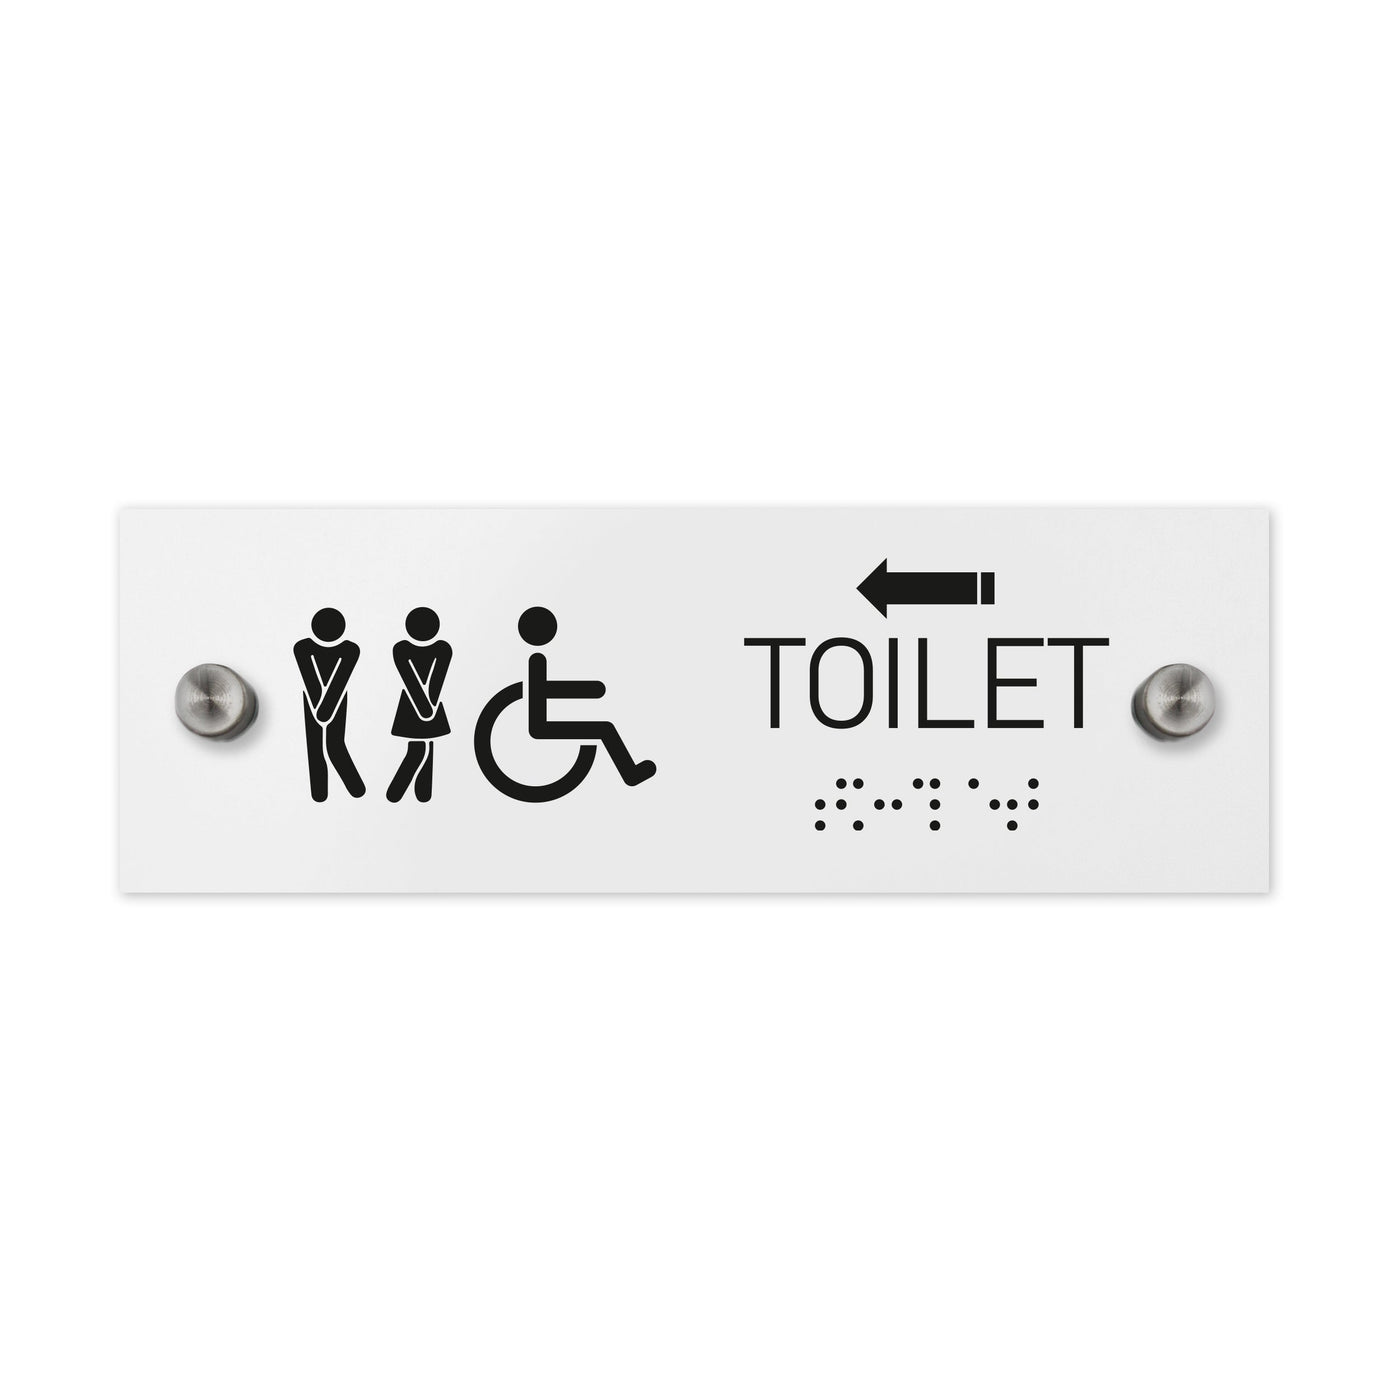 Bathroom Signs - Men & Women & Wheelchair Toilet ADA Signs With Braille - Milk Acrylic